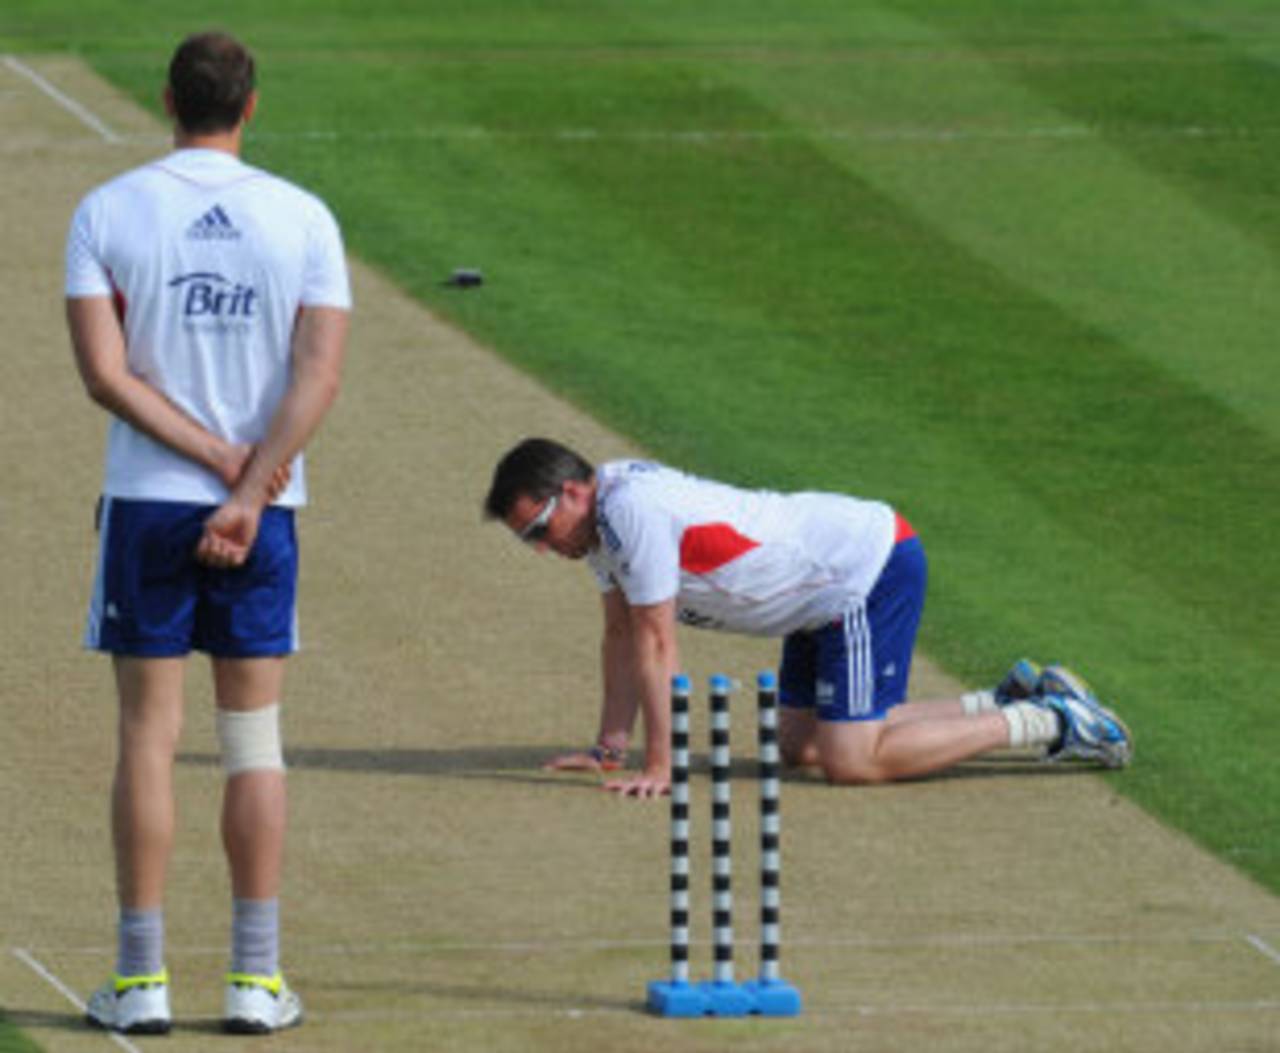 England prepared wickets to suit Graeme Swann during this series&nbsp;&nbsp;&bull;&nbsp;&nbsp;Getty Images